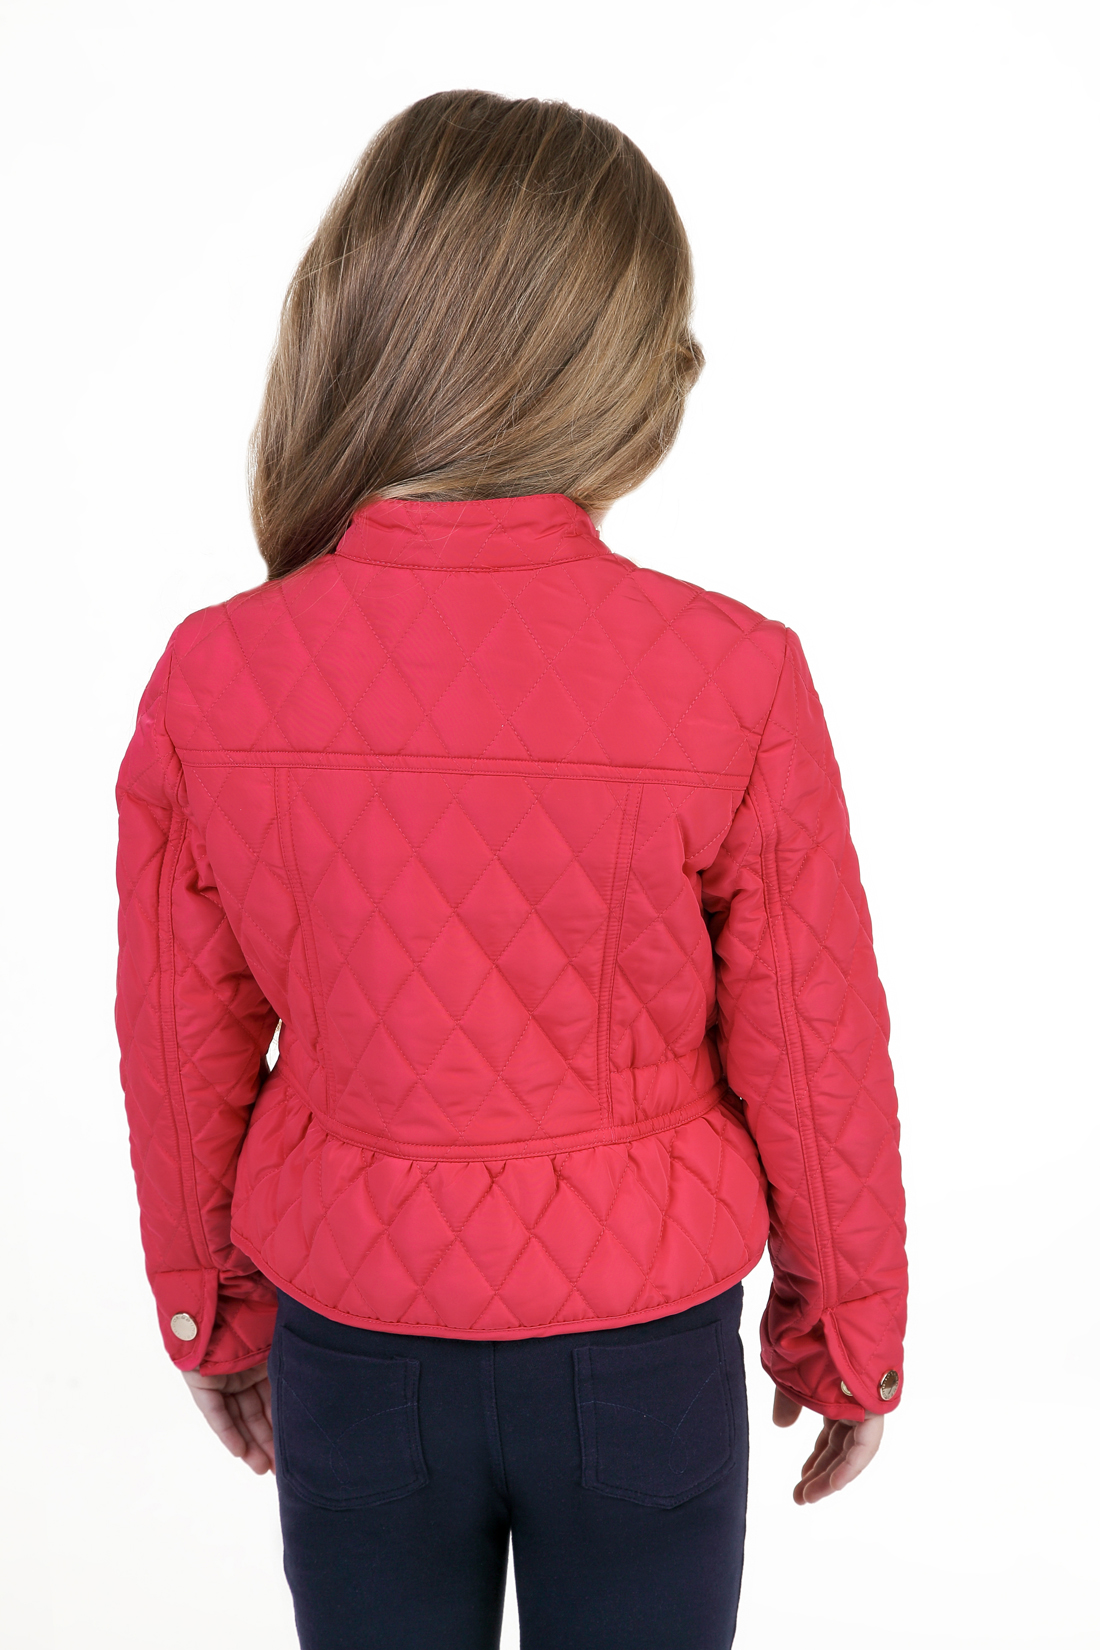 Куртка для девочки (арт. baon BK038004), размер 122-128, цвет розовый Куртка для девочки (арт. baon BK038004) - фото 2